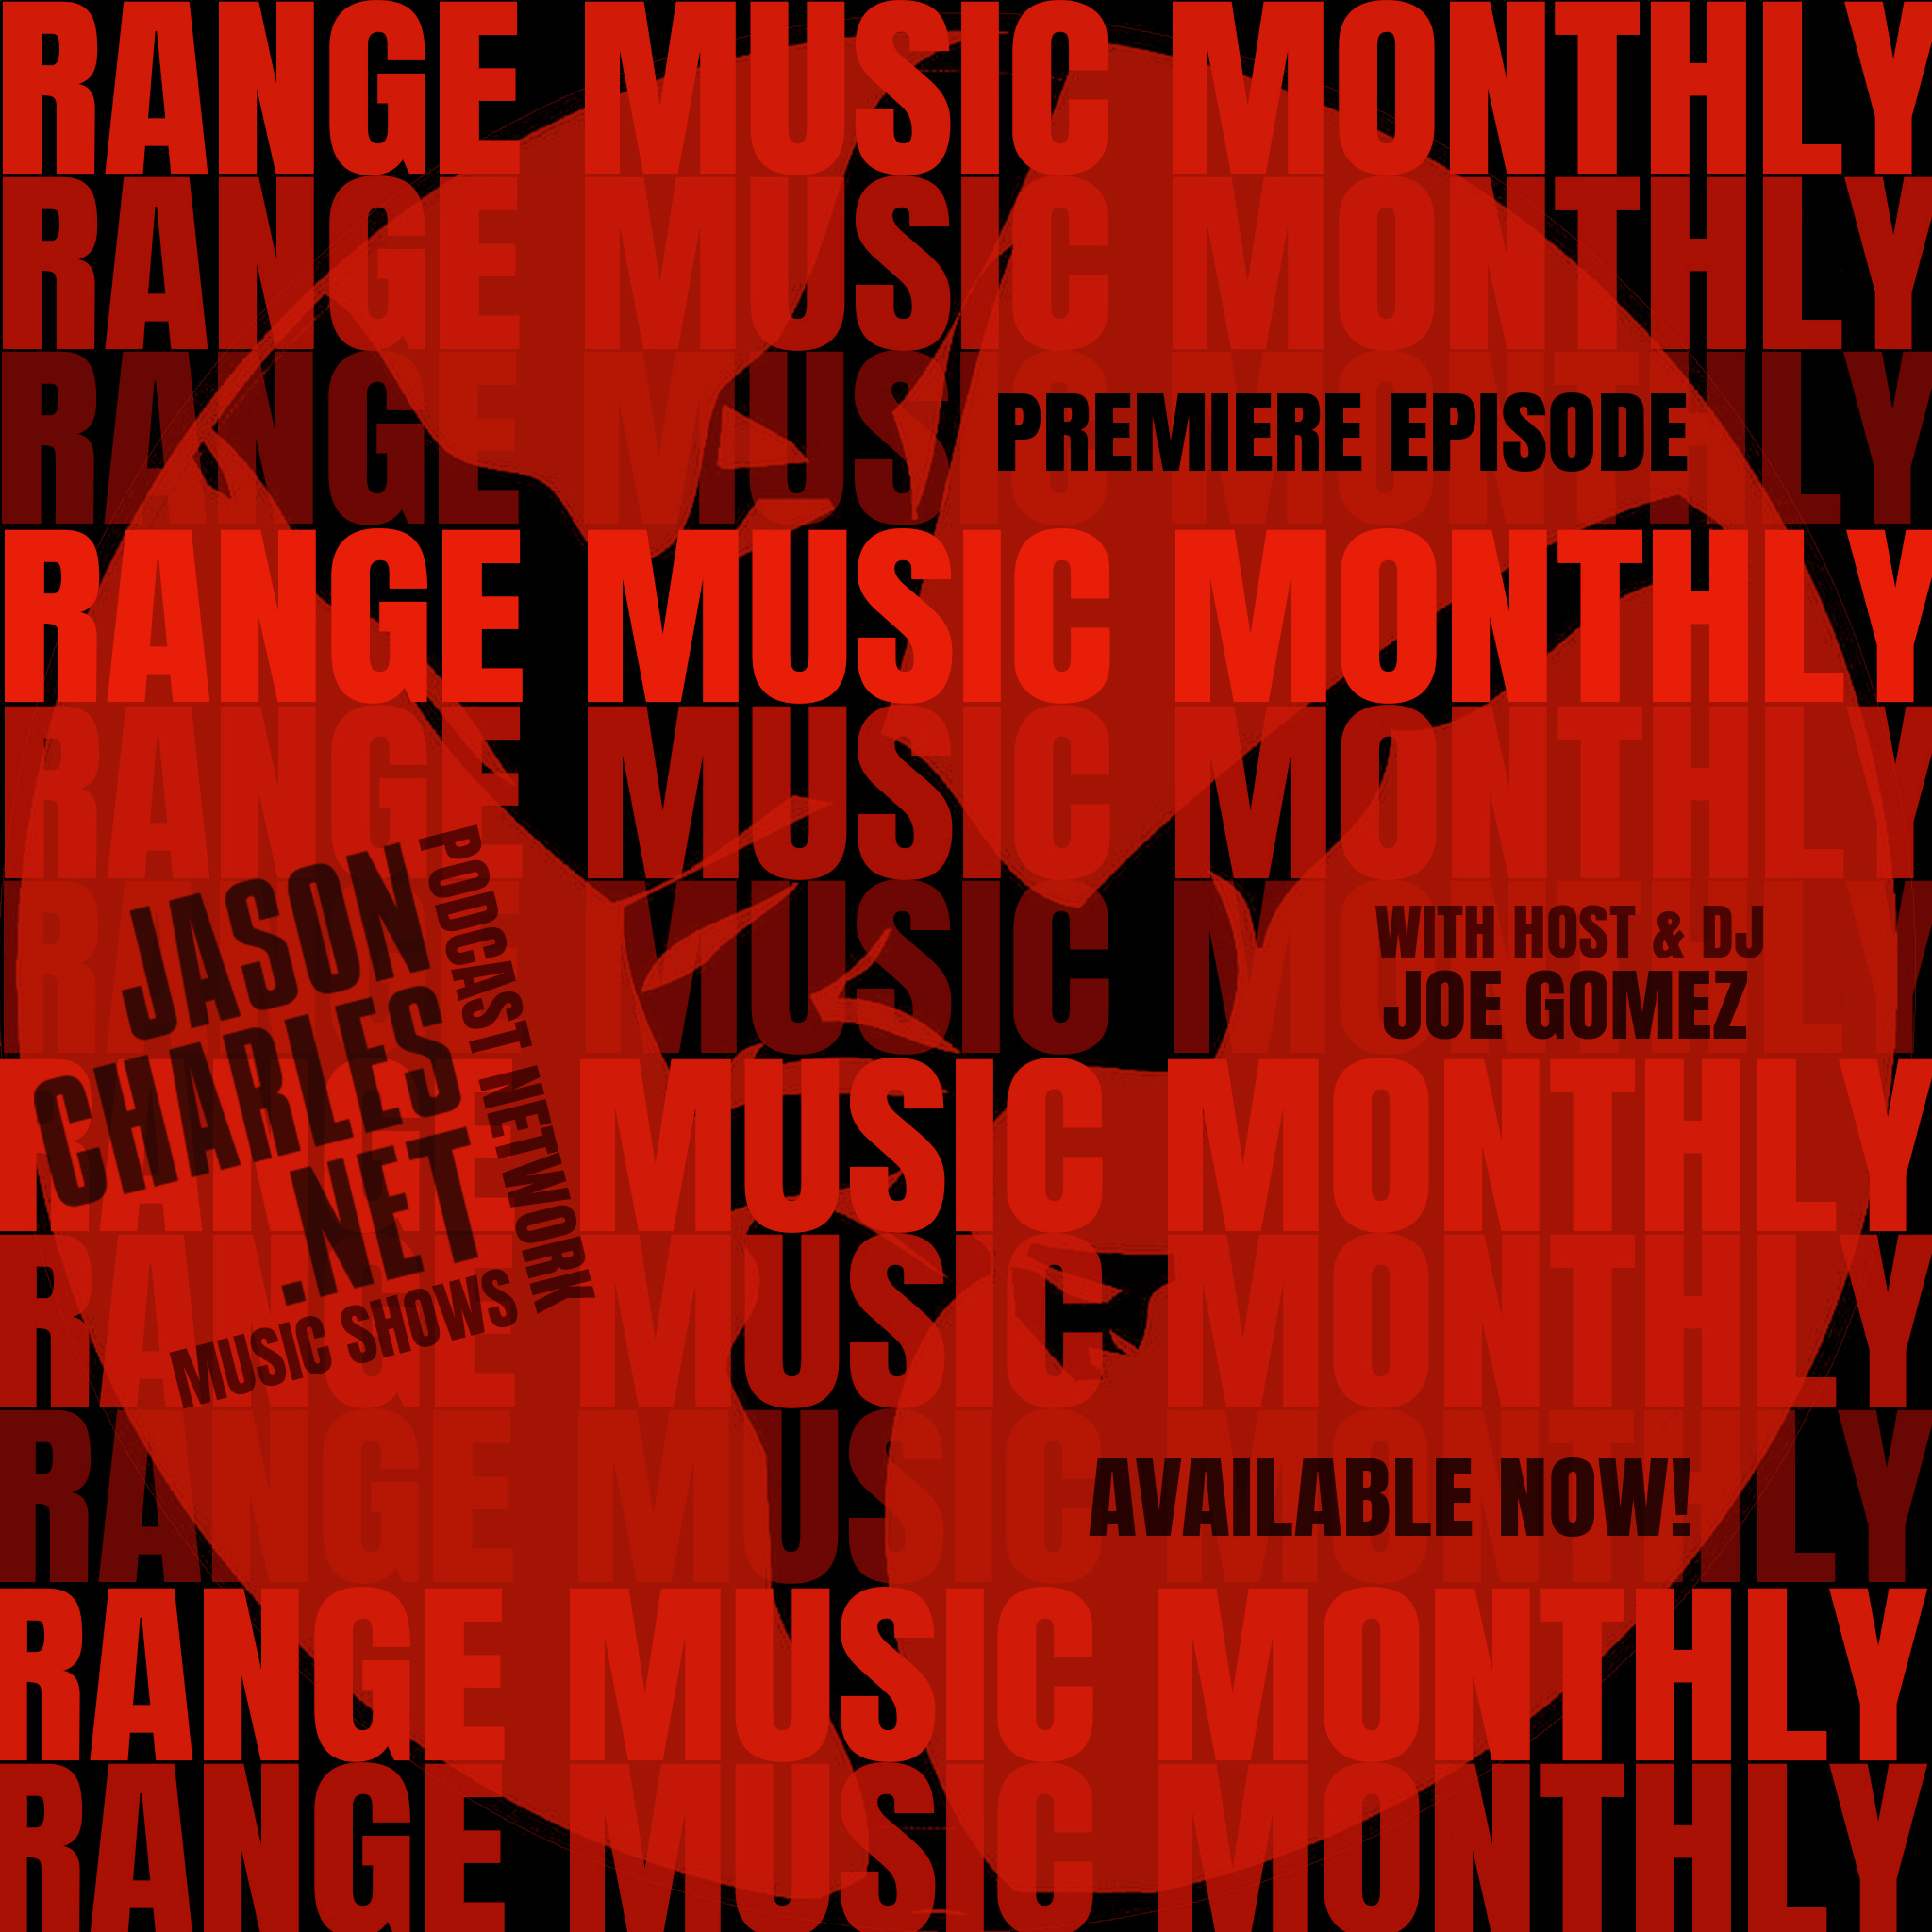 RANGE MUSIC MONTHLY with DJ Joe Gomez Episode 1 Series Premiere!